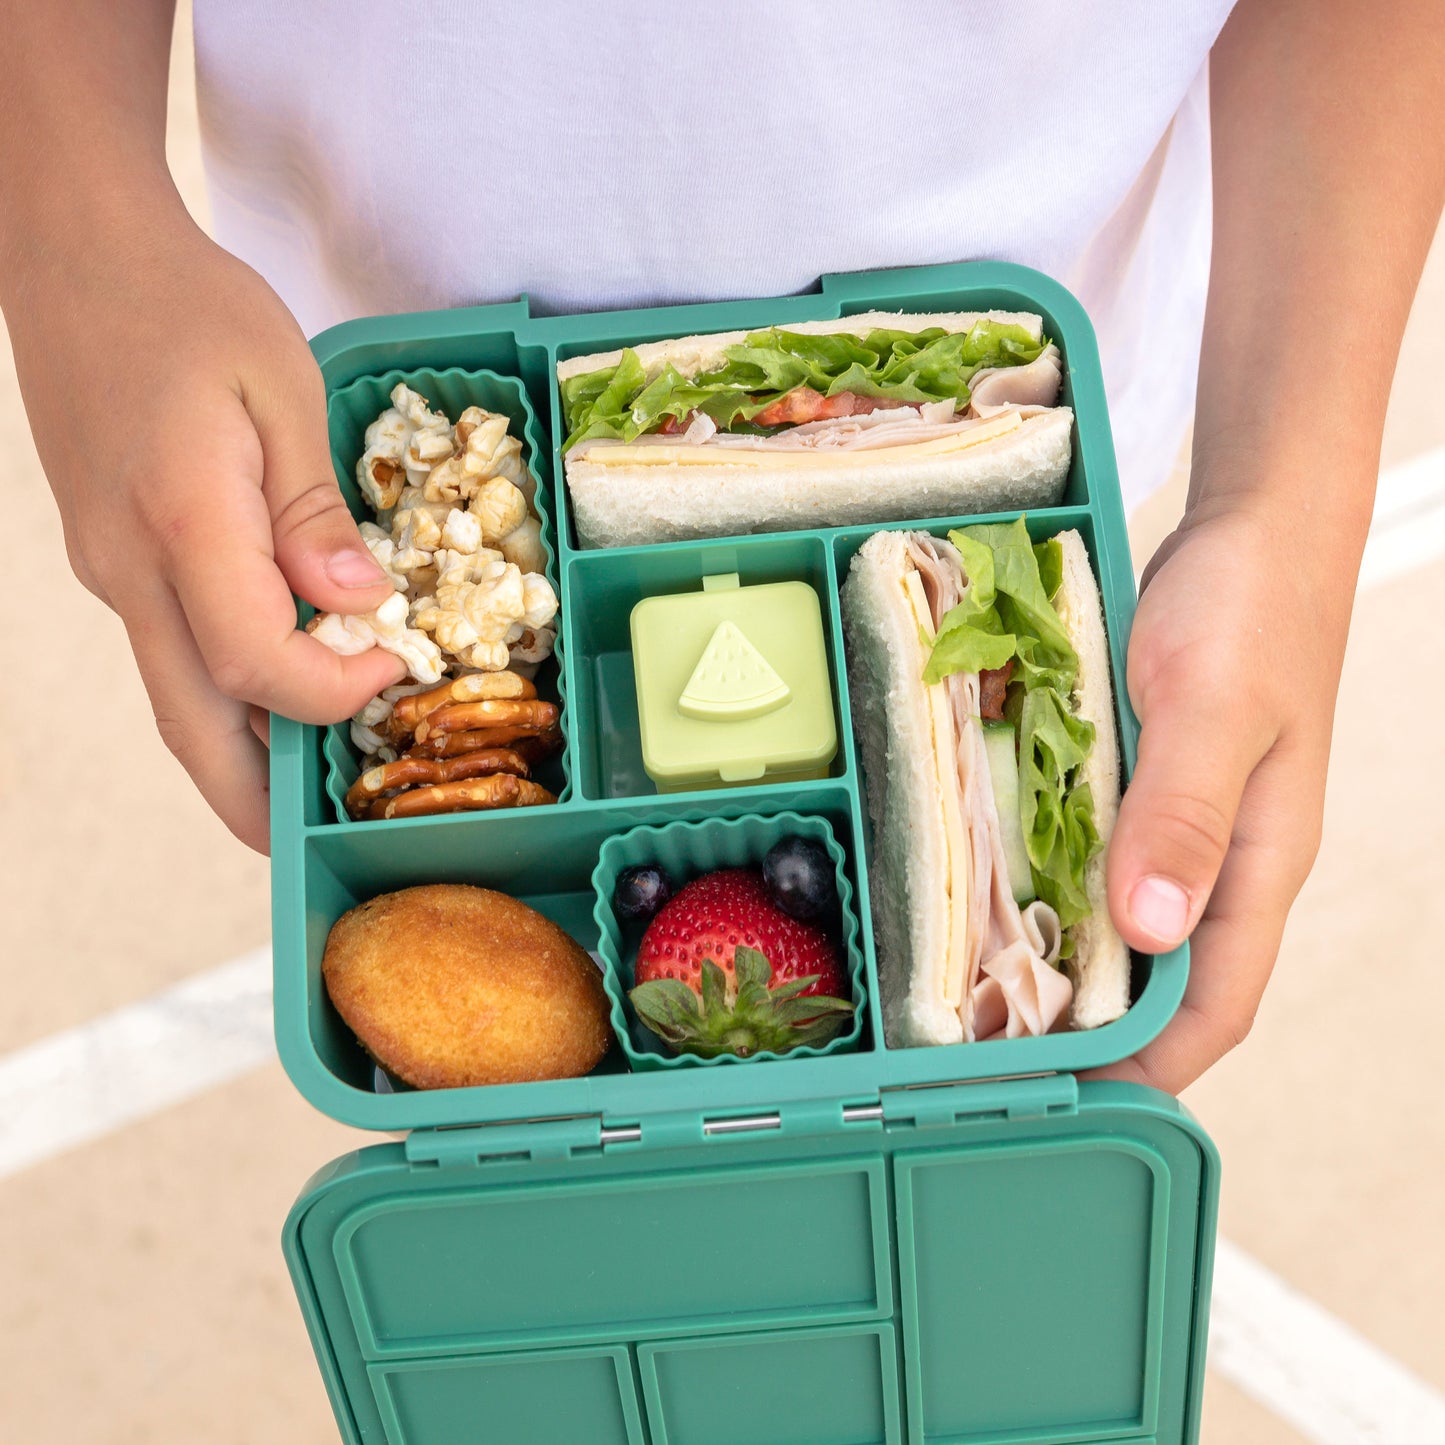 Little Lunch Box Co. Bento 5 - Apple